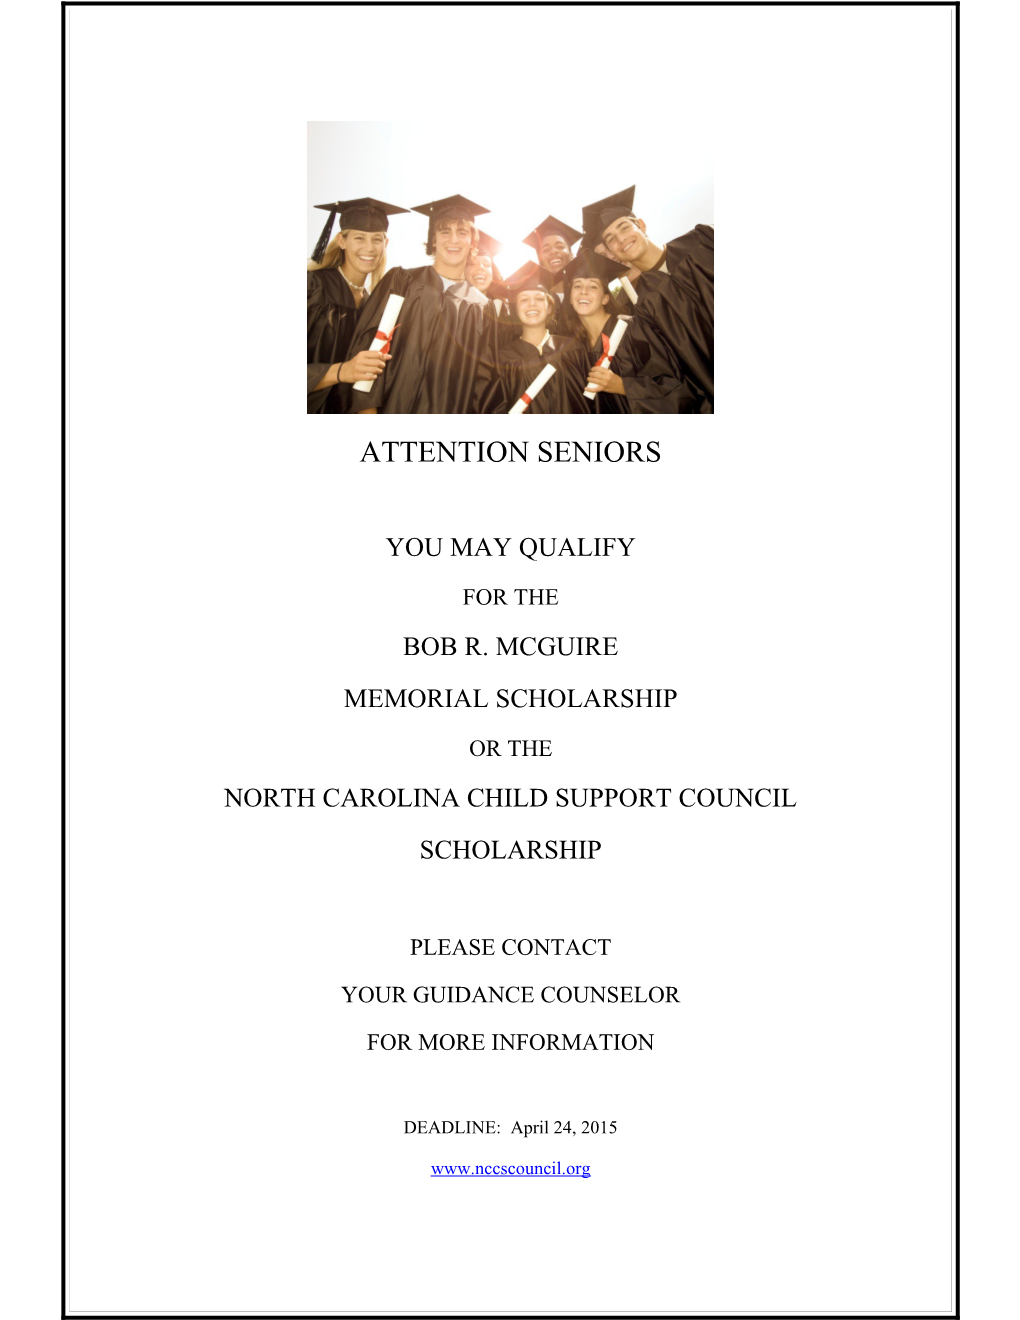 North Carolina Child Support Council